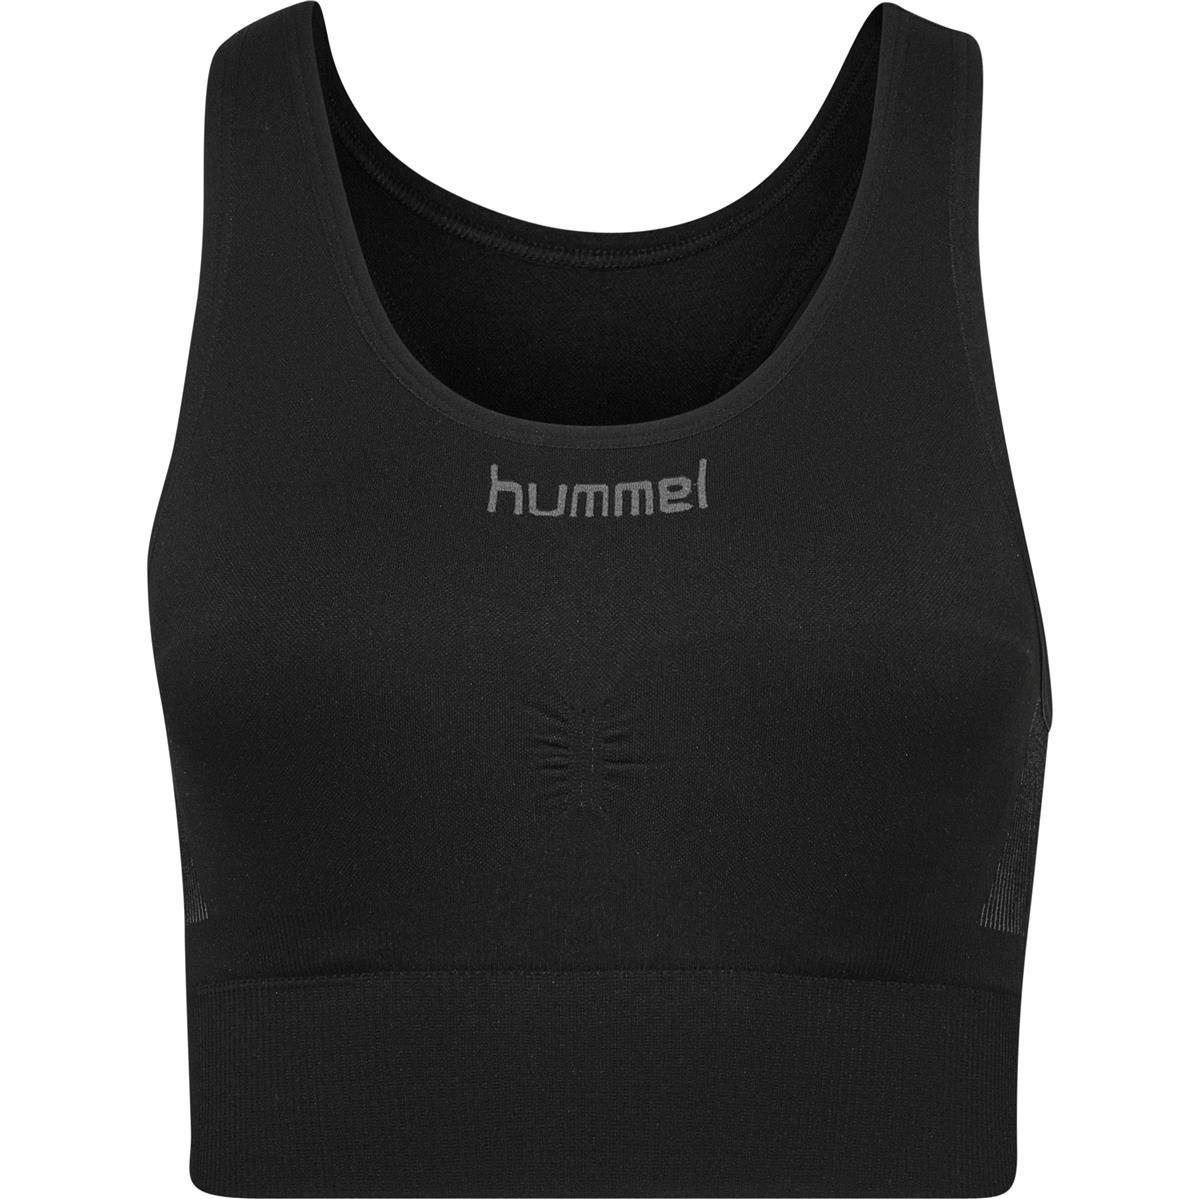 Hummel HUMMEL FIRST SEAMLESS BRA WOMAN - BLACK - XL-2X